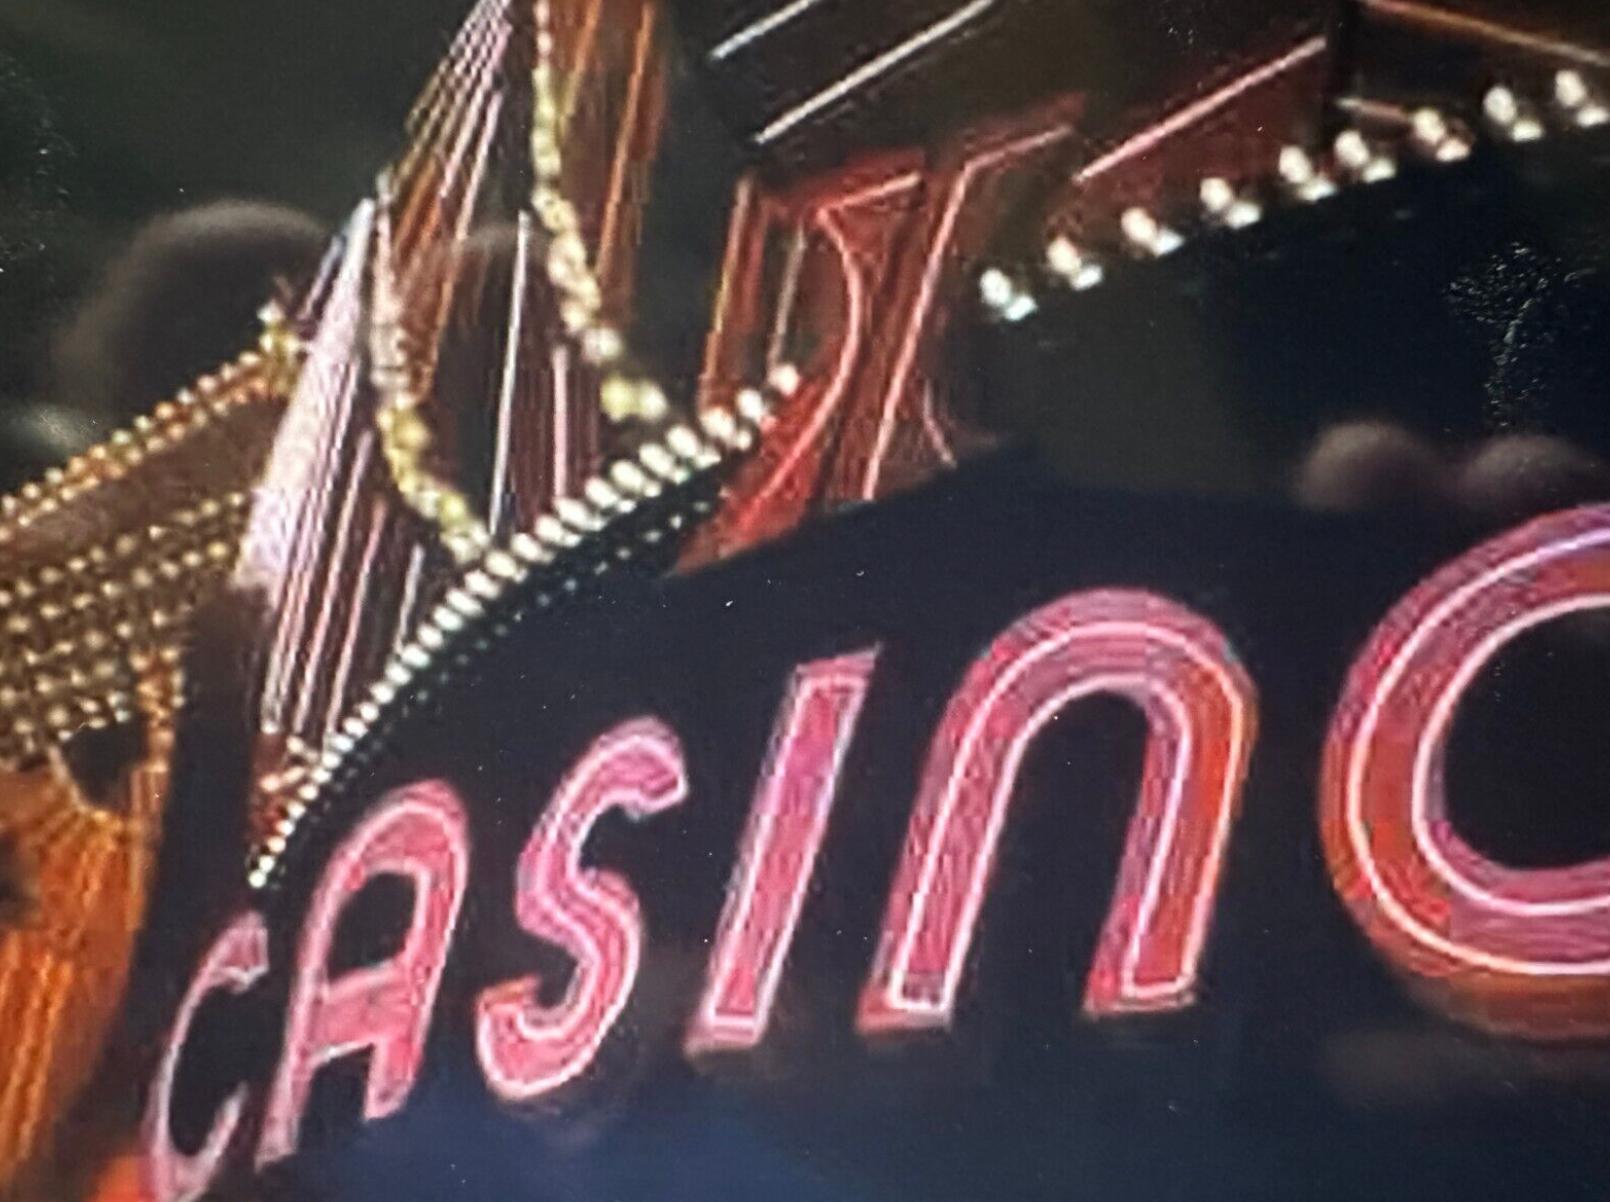 Casino -- Huge Original Oil Painting by Renowned Photorealist Mark Schiff

56